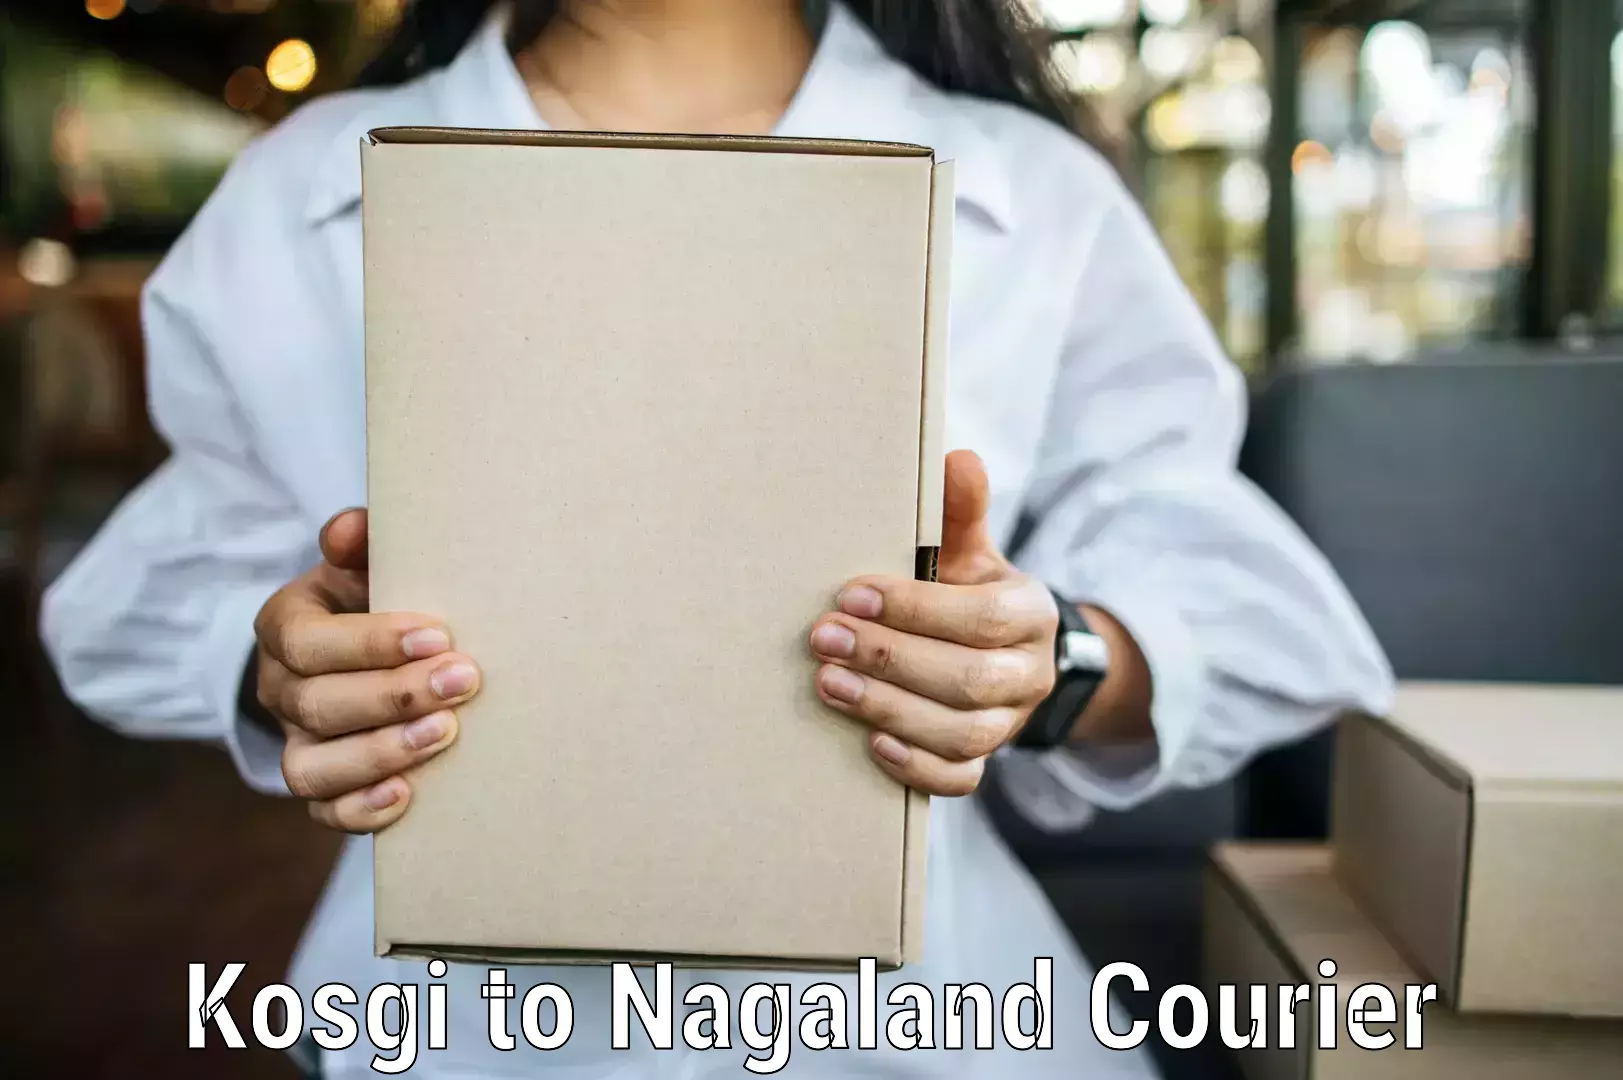 Courier service comparison Kosgi to Nagaland